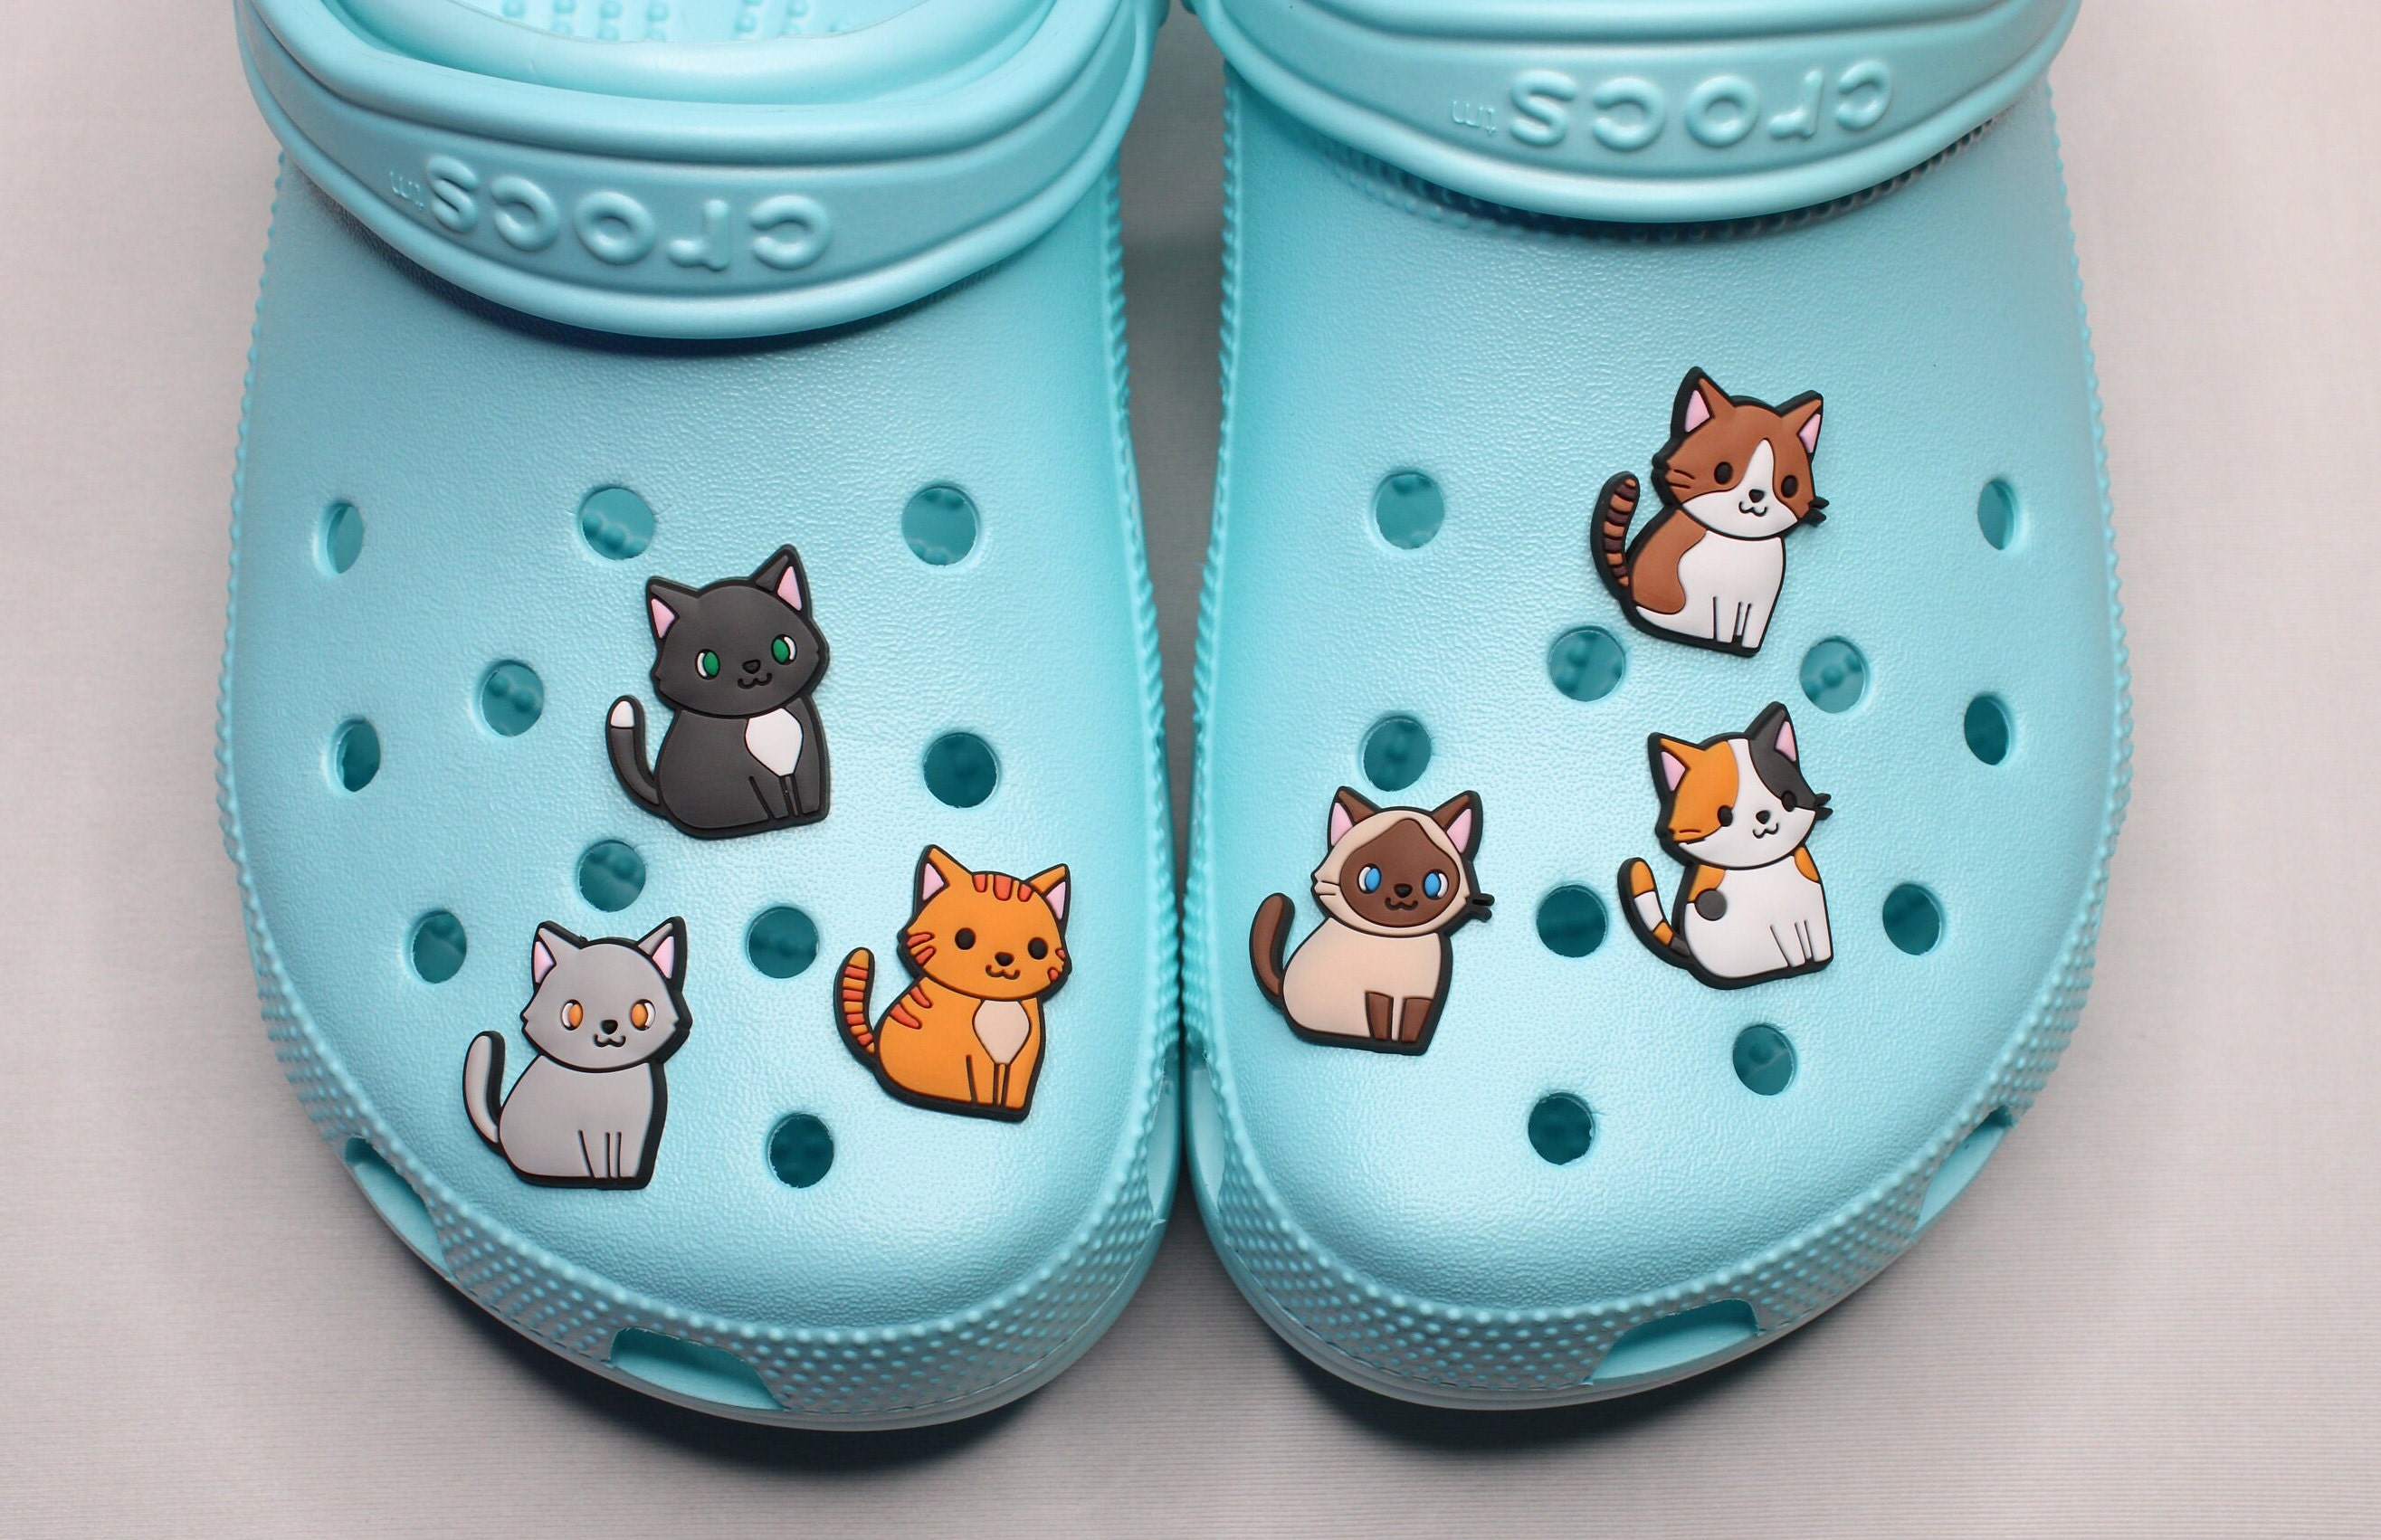 22pcs Bad Bunny Theme Theme Crocs Shoe Charms For Diy Crocs Clog Sandals  Decoration Charms Shoes Accessories Set Gifts